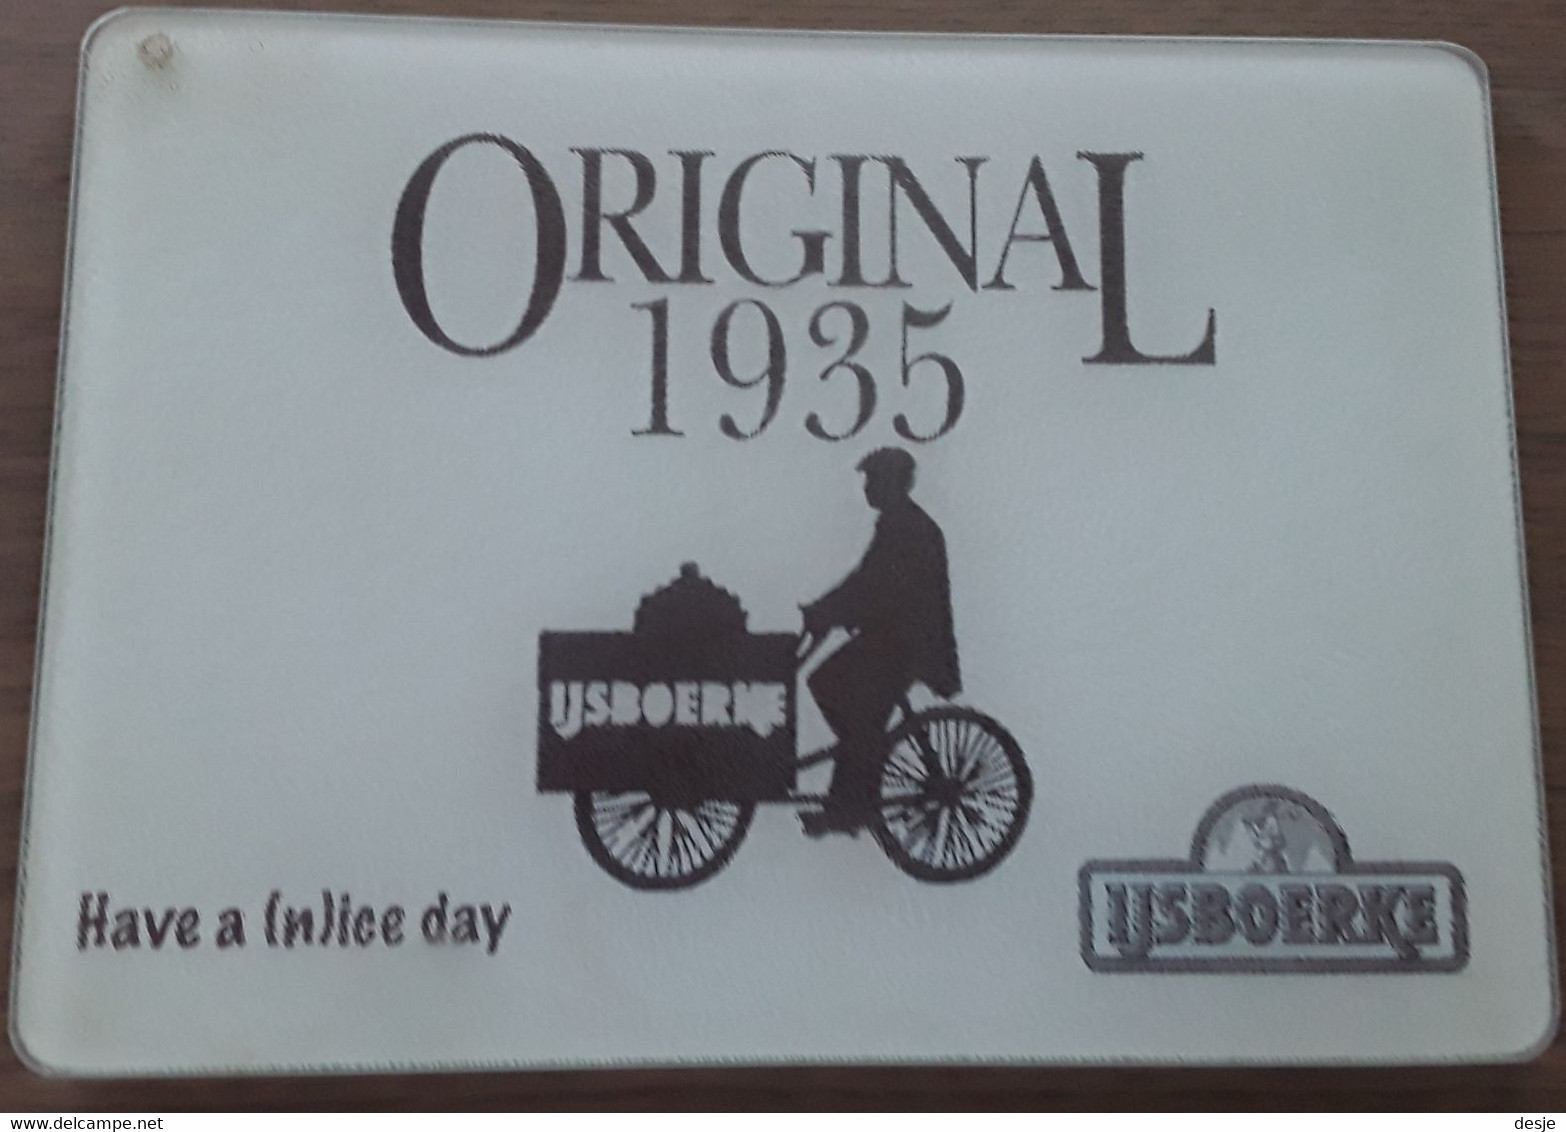 Ijsboerke Original 1935 Have A (n)ice Day - Manifesti